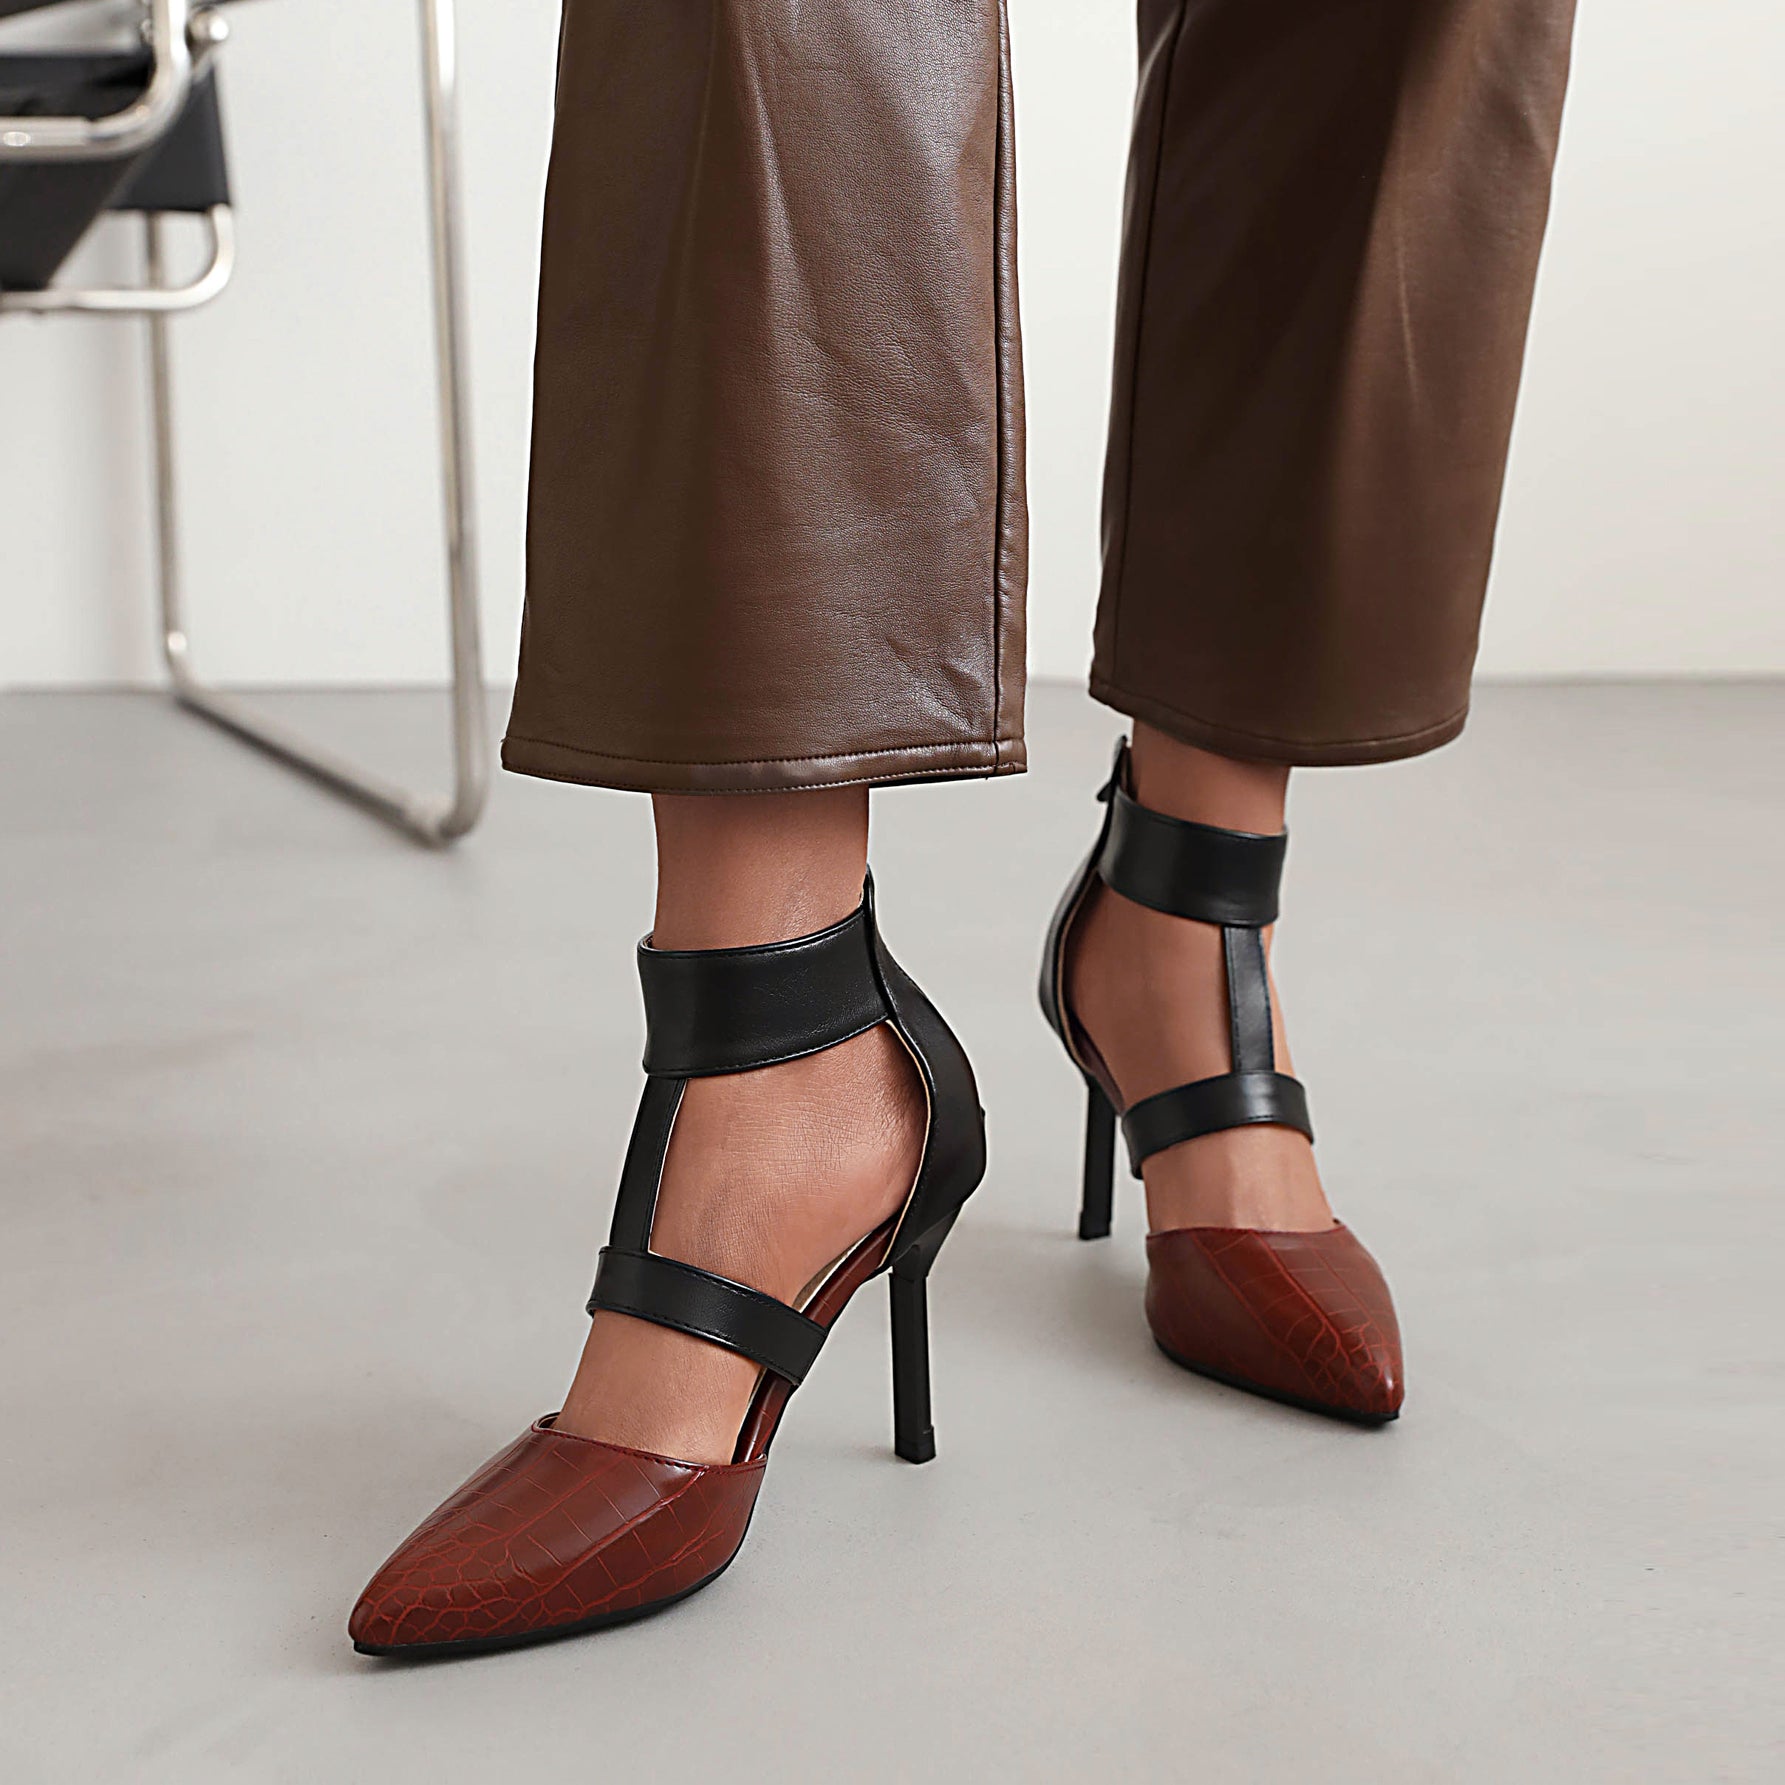 the Bigsizeheels T Strap Pointed Toe_Stiletto Heels Sandals - Burgundy best oversized womens heels from bigsizeheel®